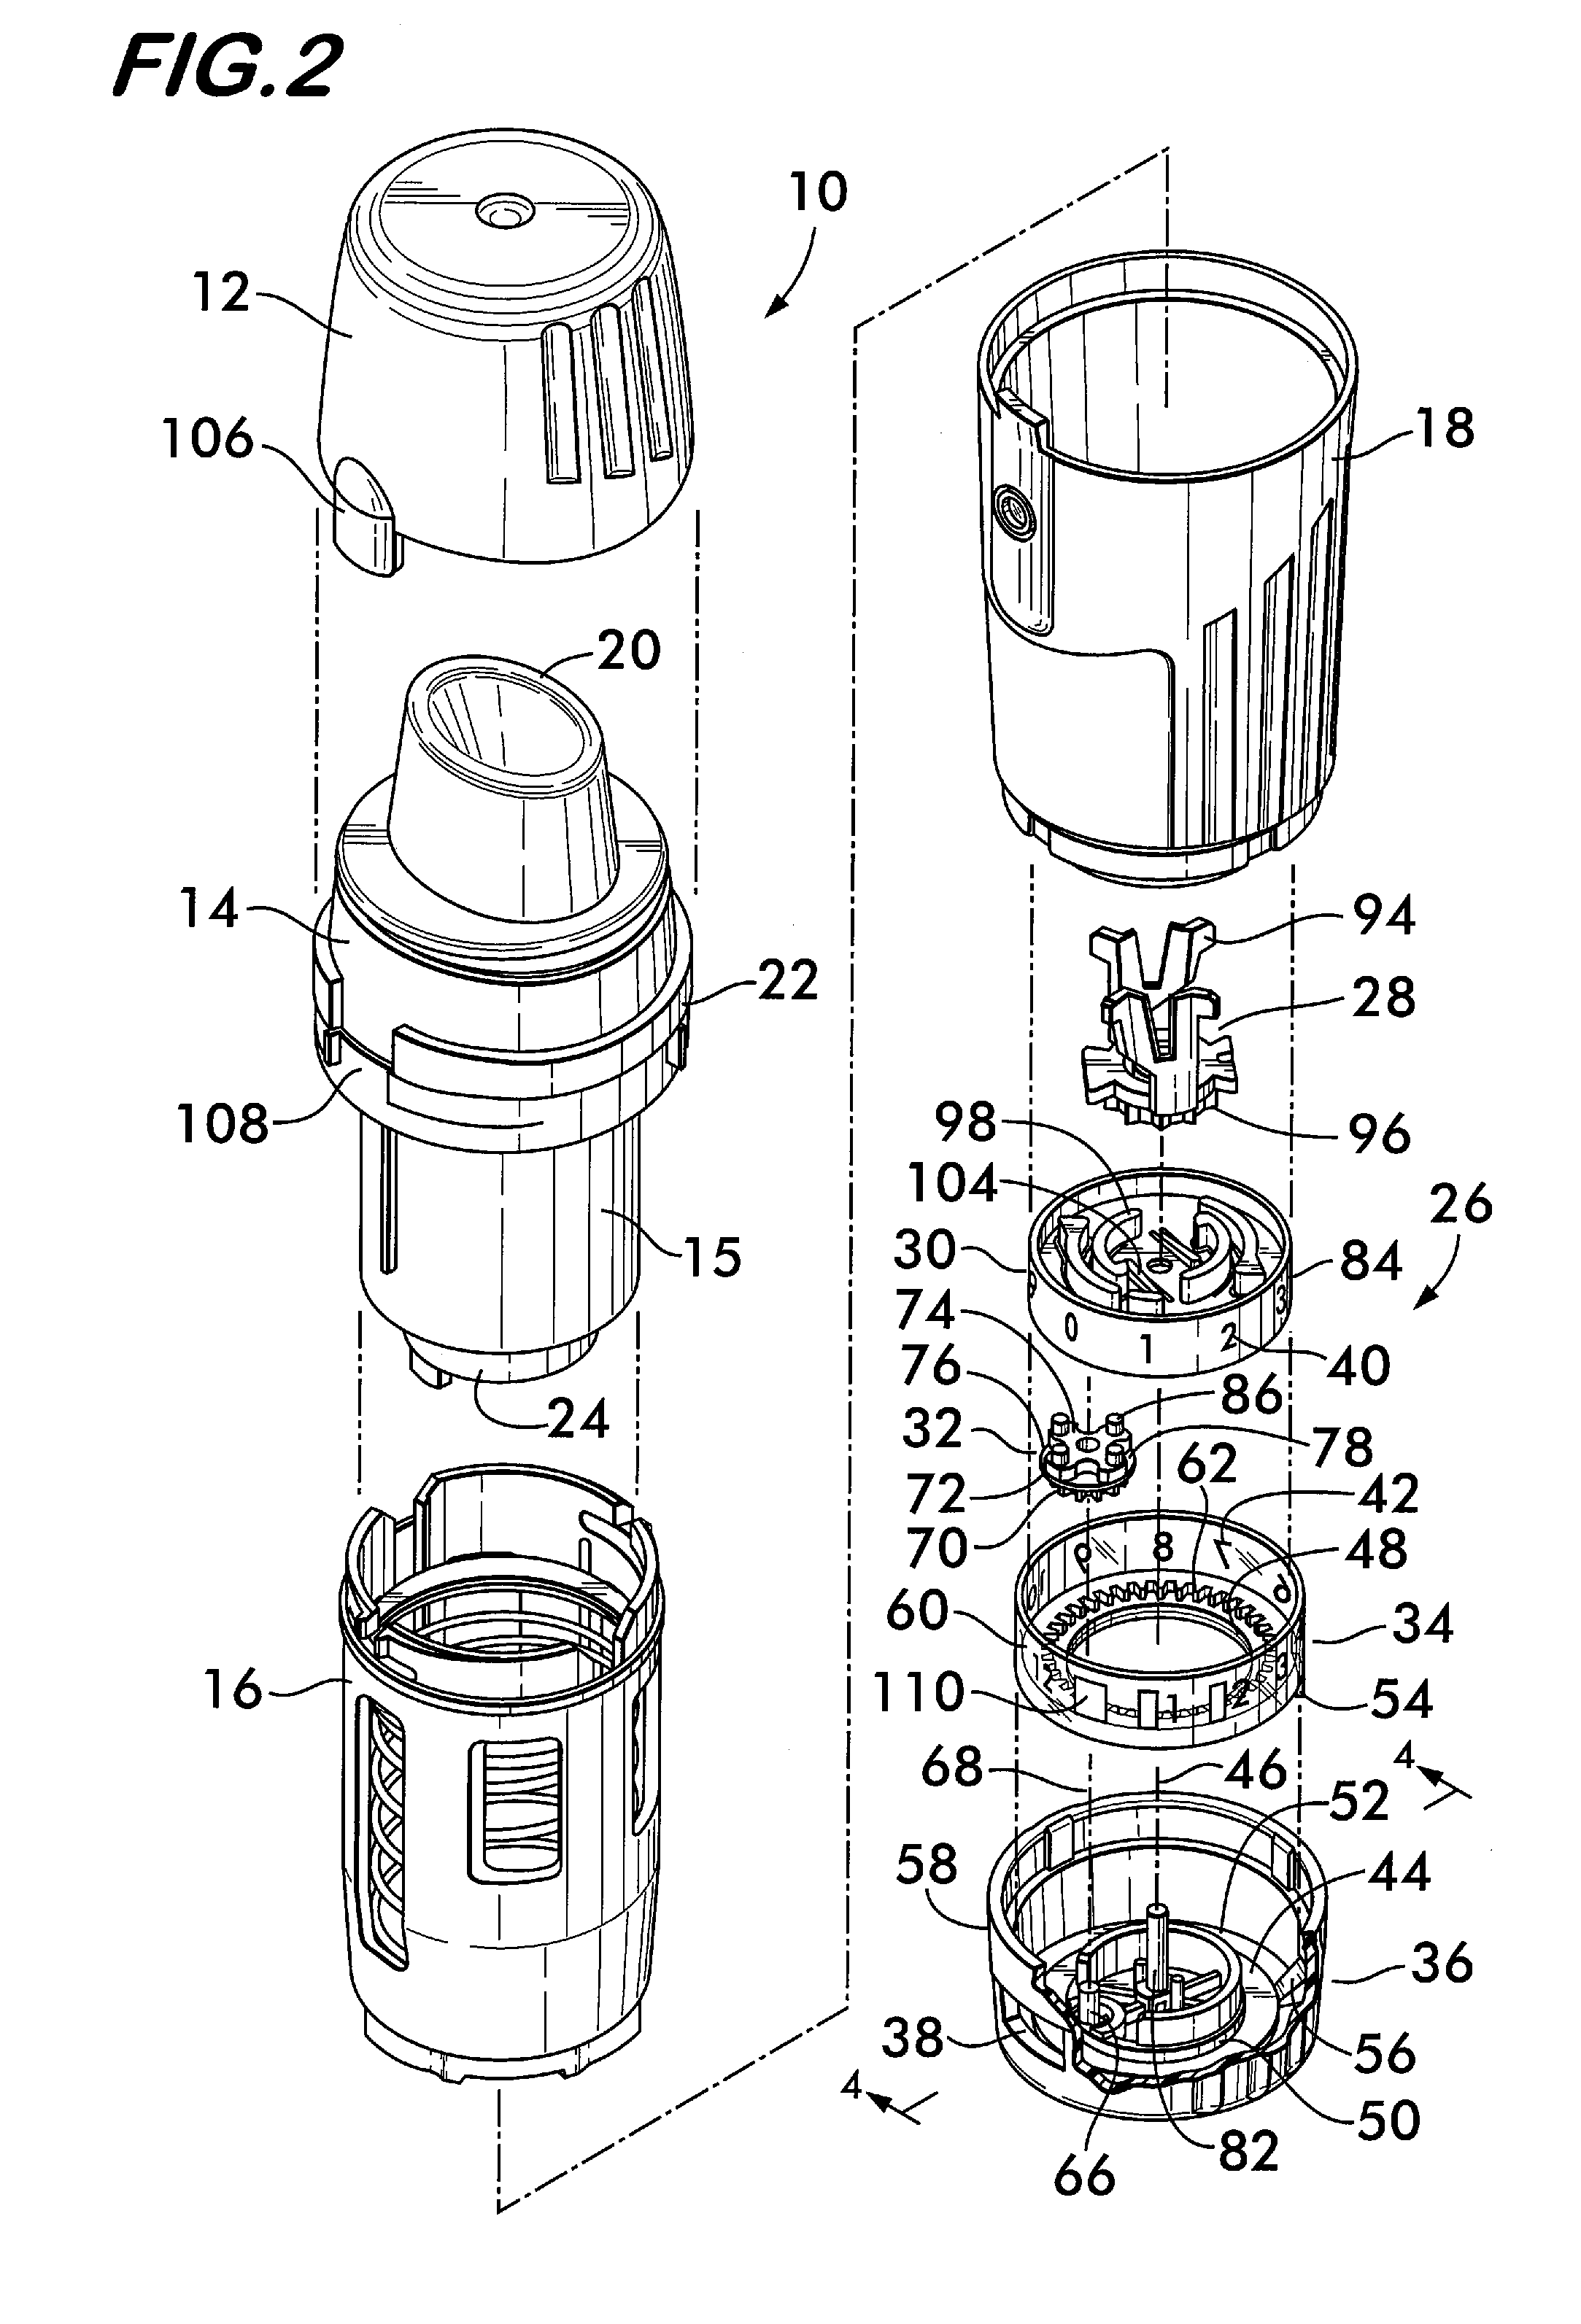 Mechanical Doses Counter for a Powder Inhaler